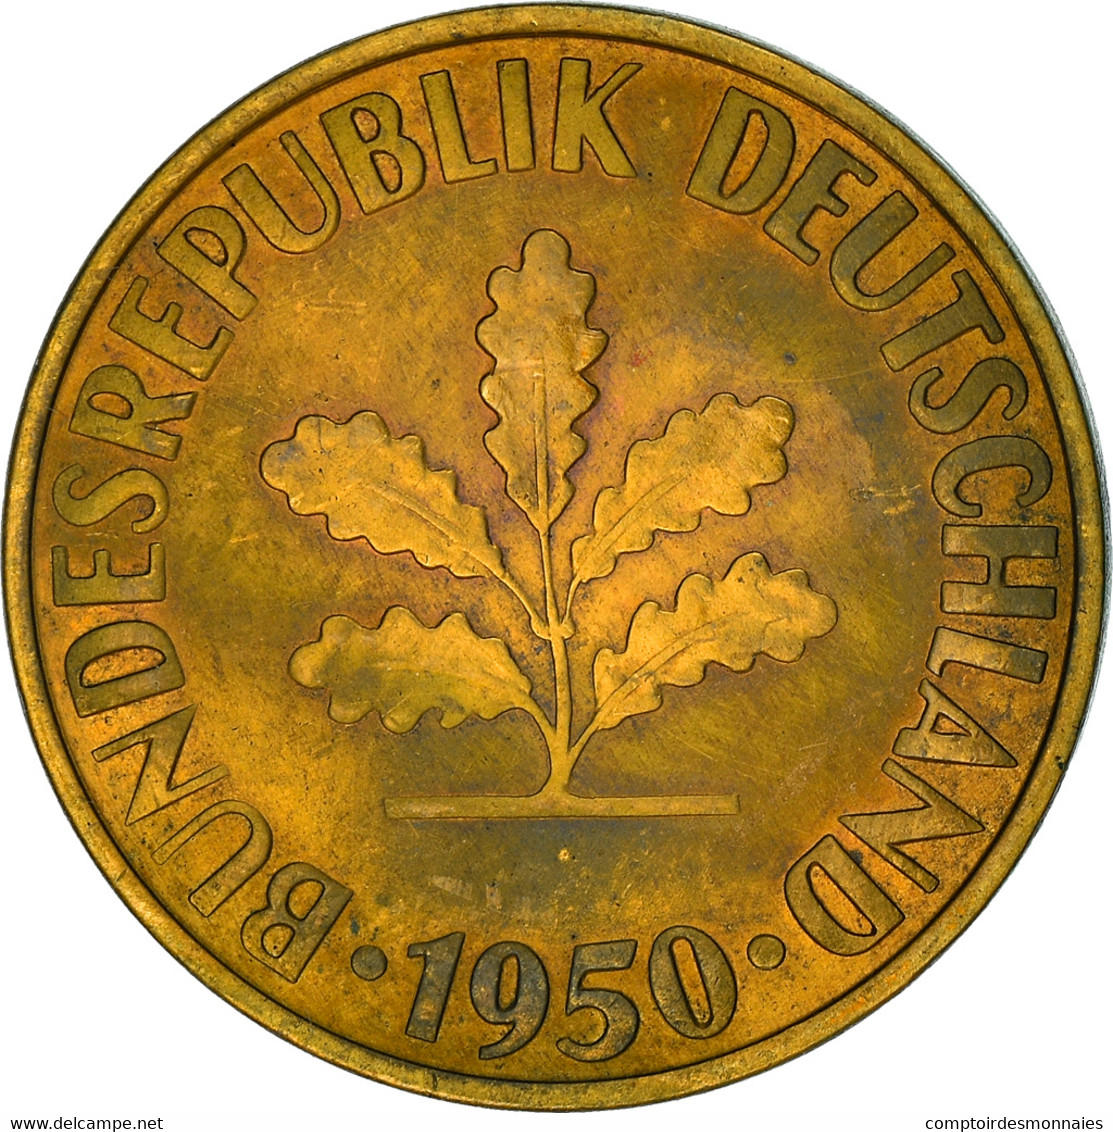 Monnaie, République Fédérale Allemande, 10 Pfennig, 1950, Karlsruhe, TTB+ - 10 Pfennig